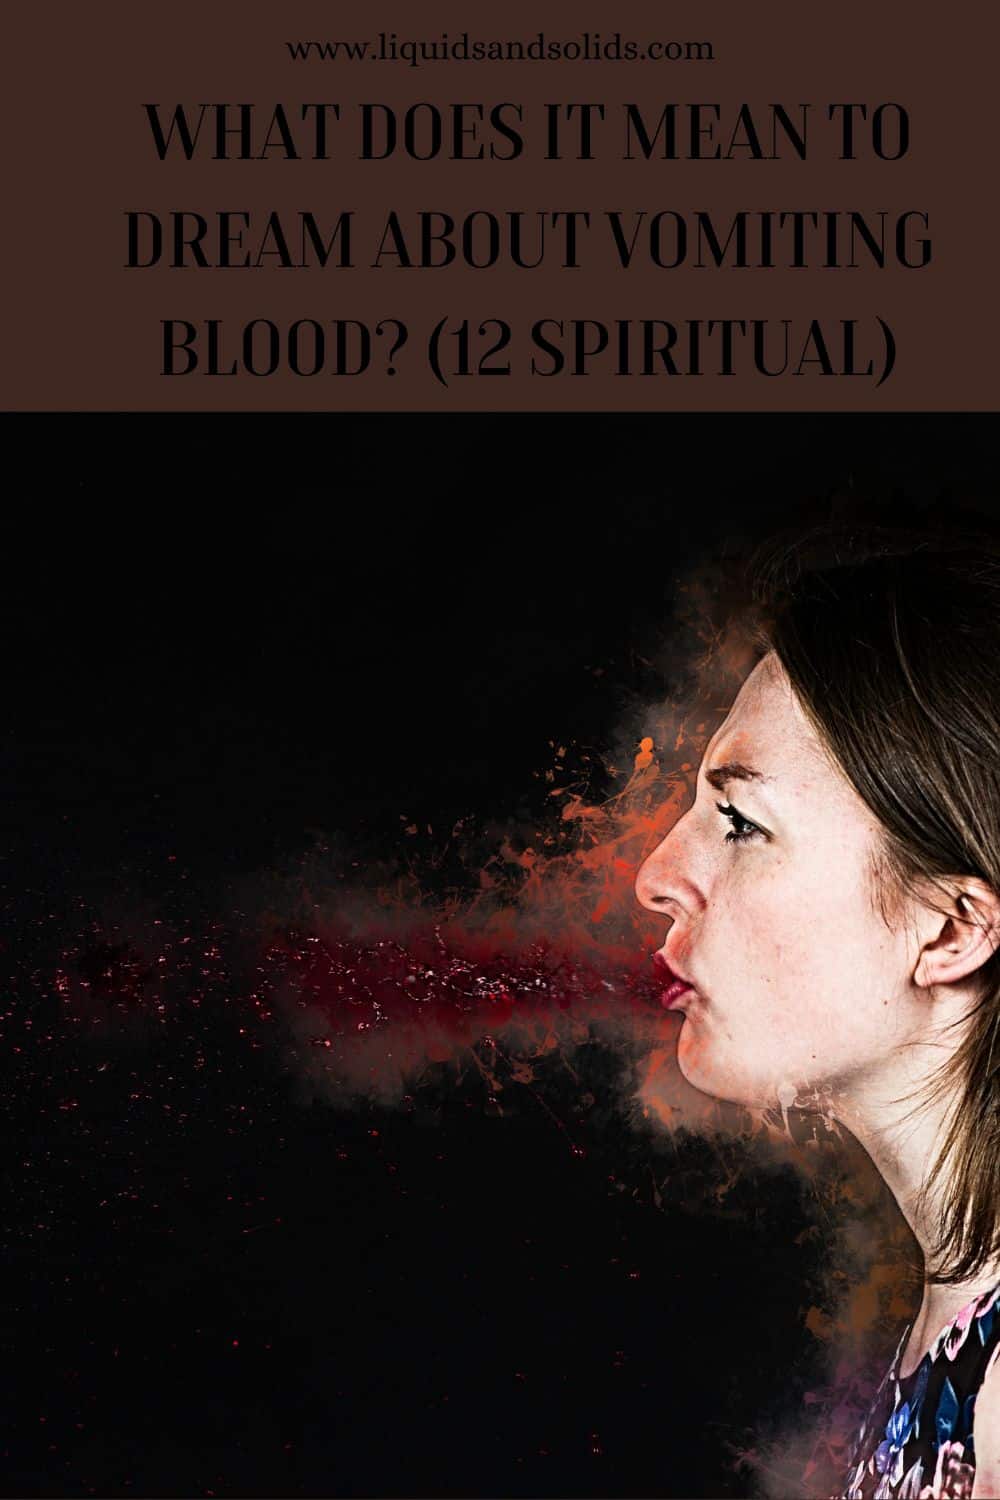  Unenägu vere oksendamisest? (12 vaimset tähendust)